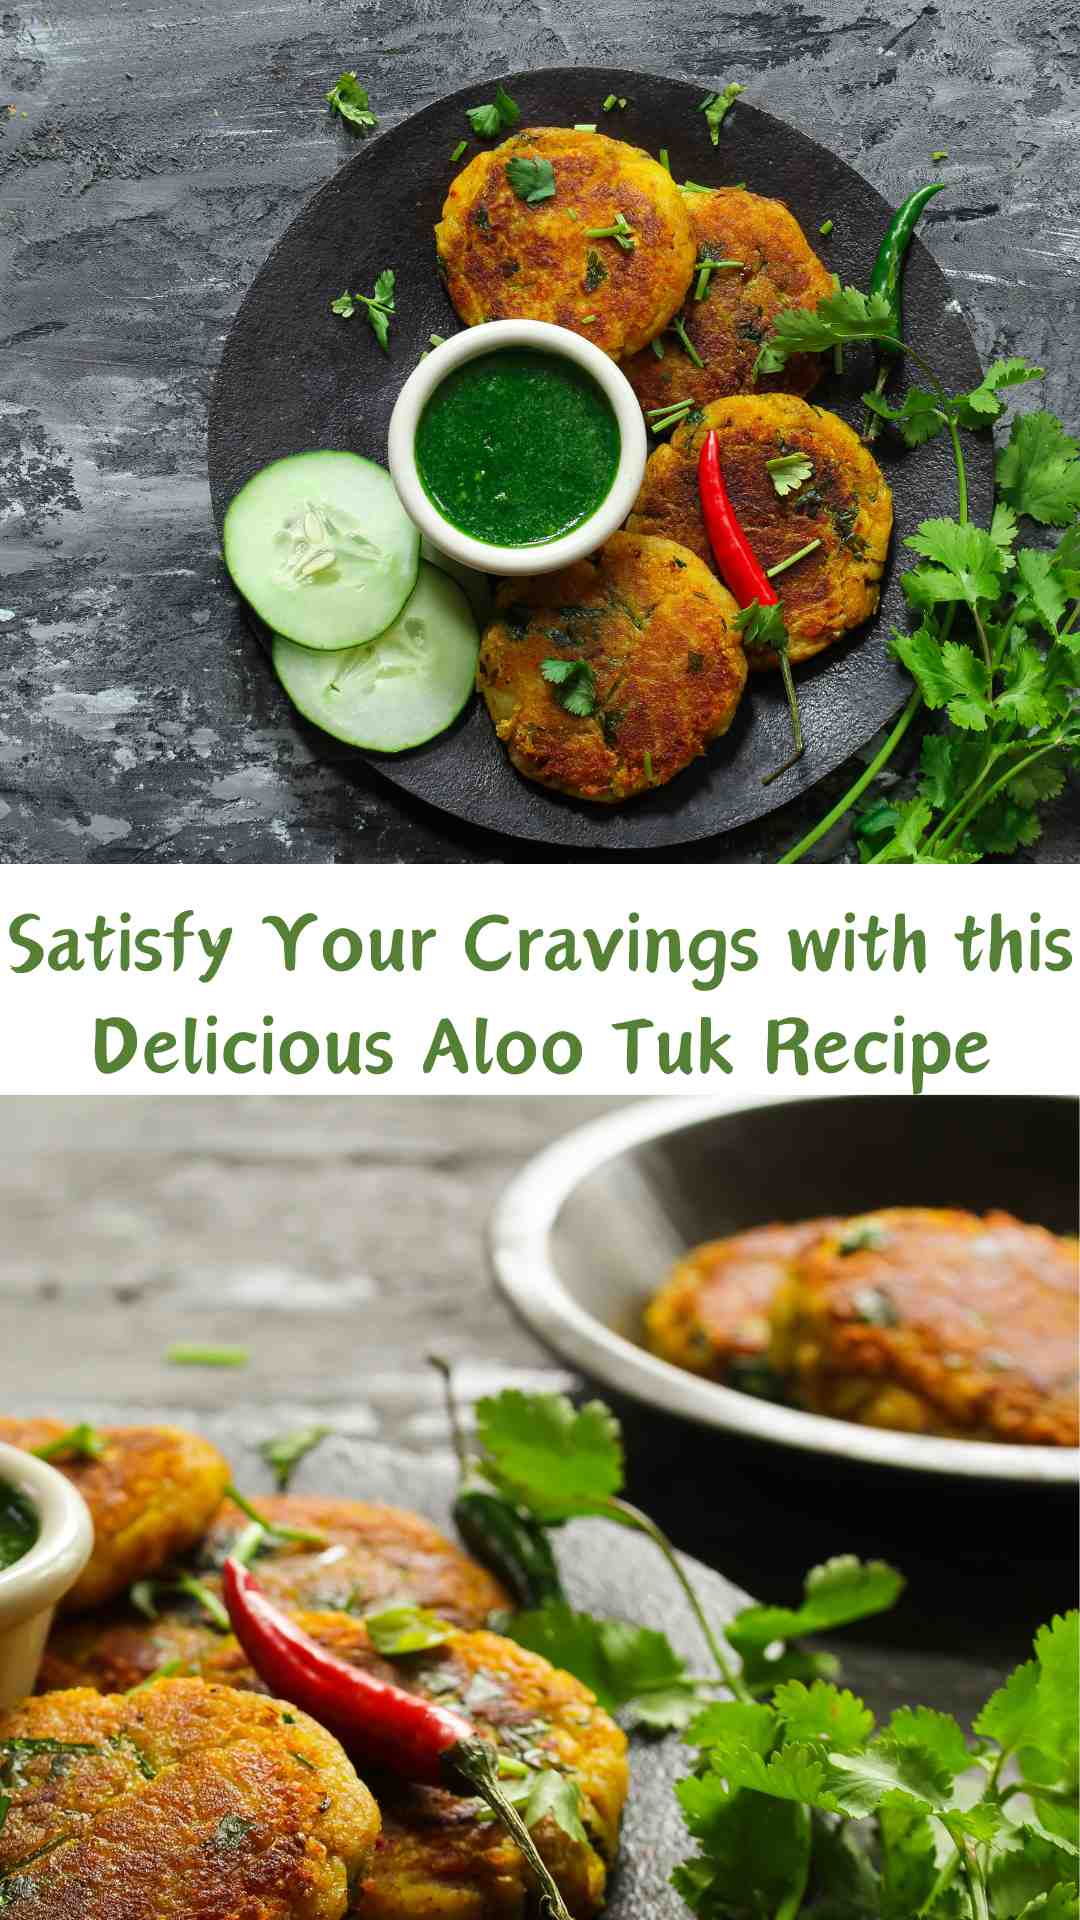 Aloo Tuk Recipe